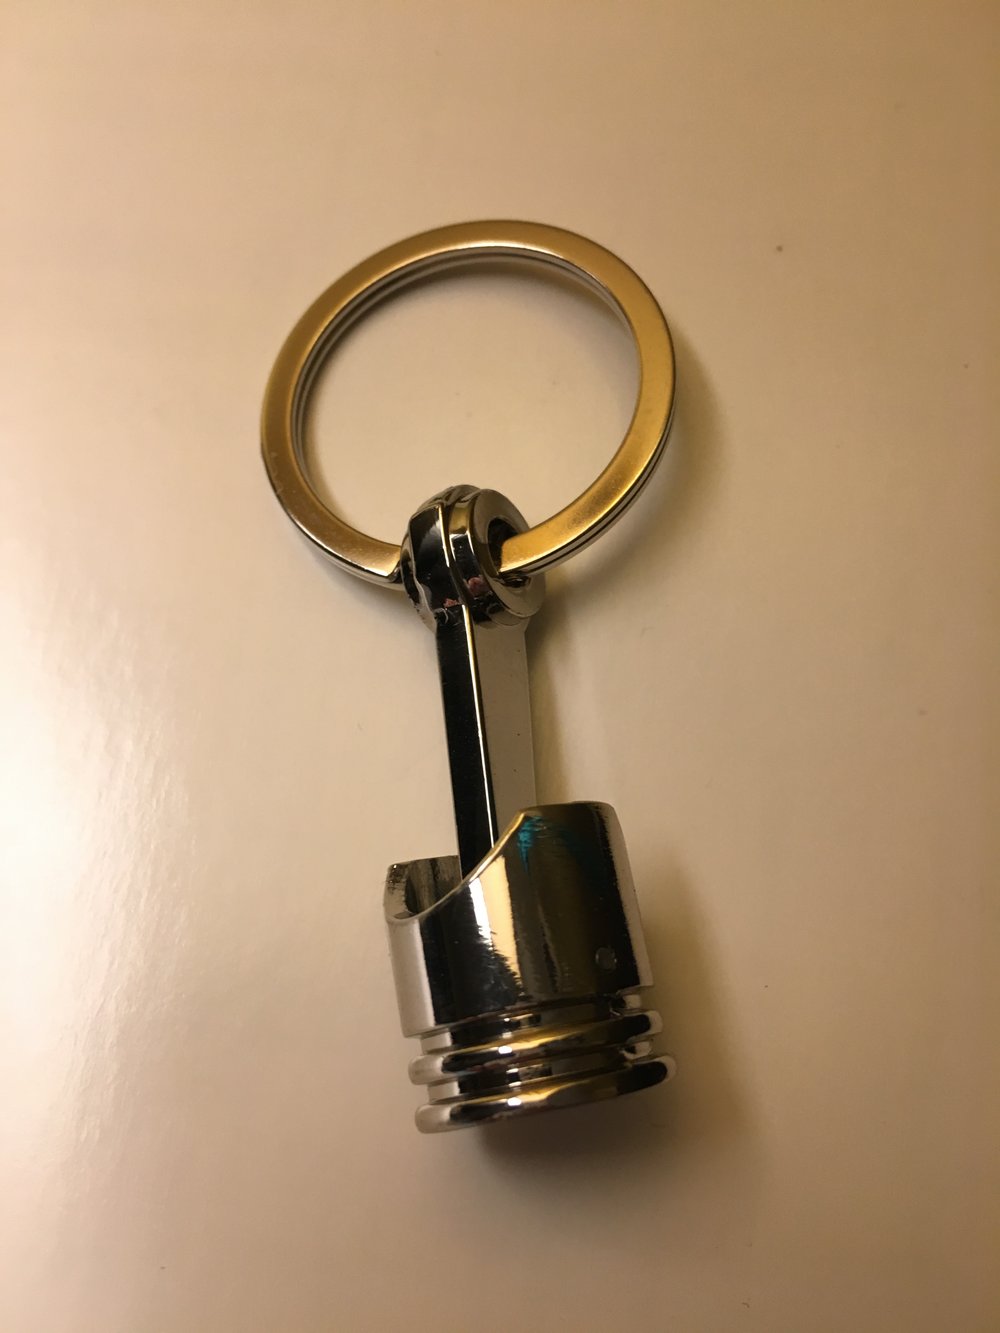 Piston key chain